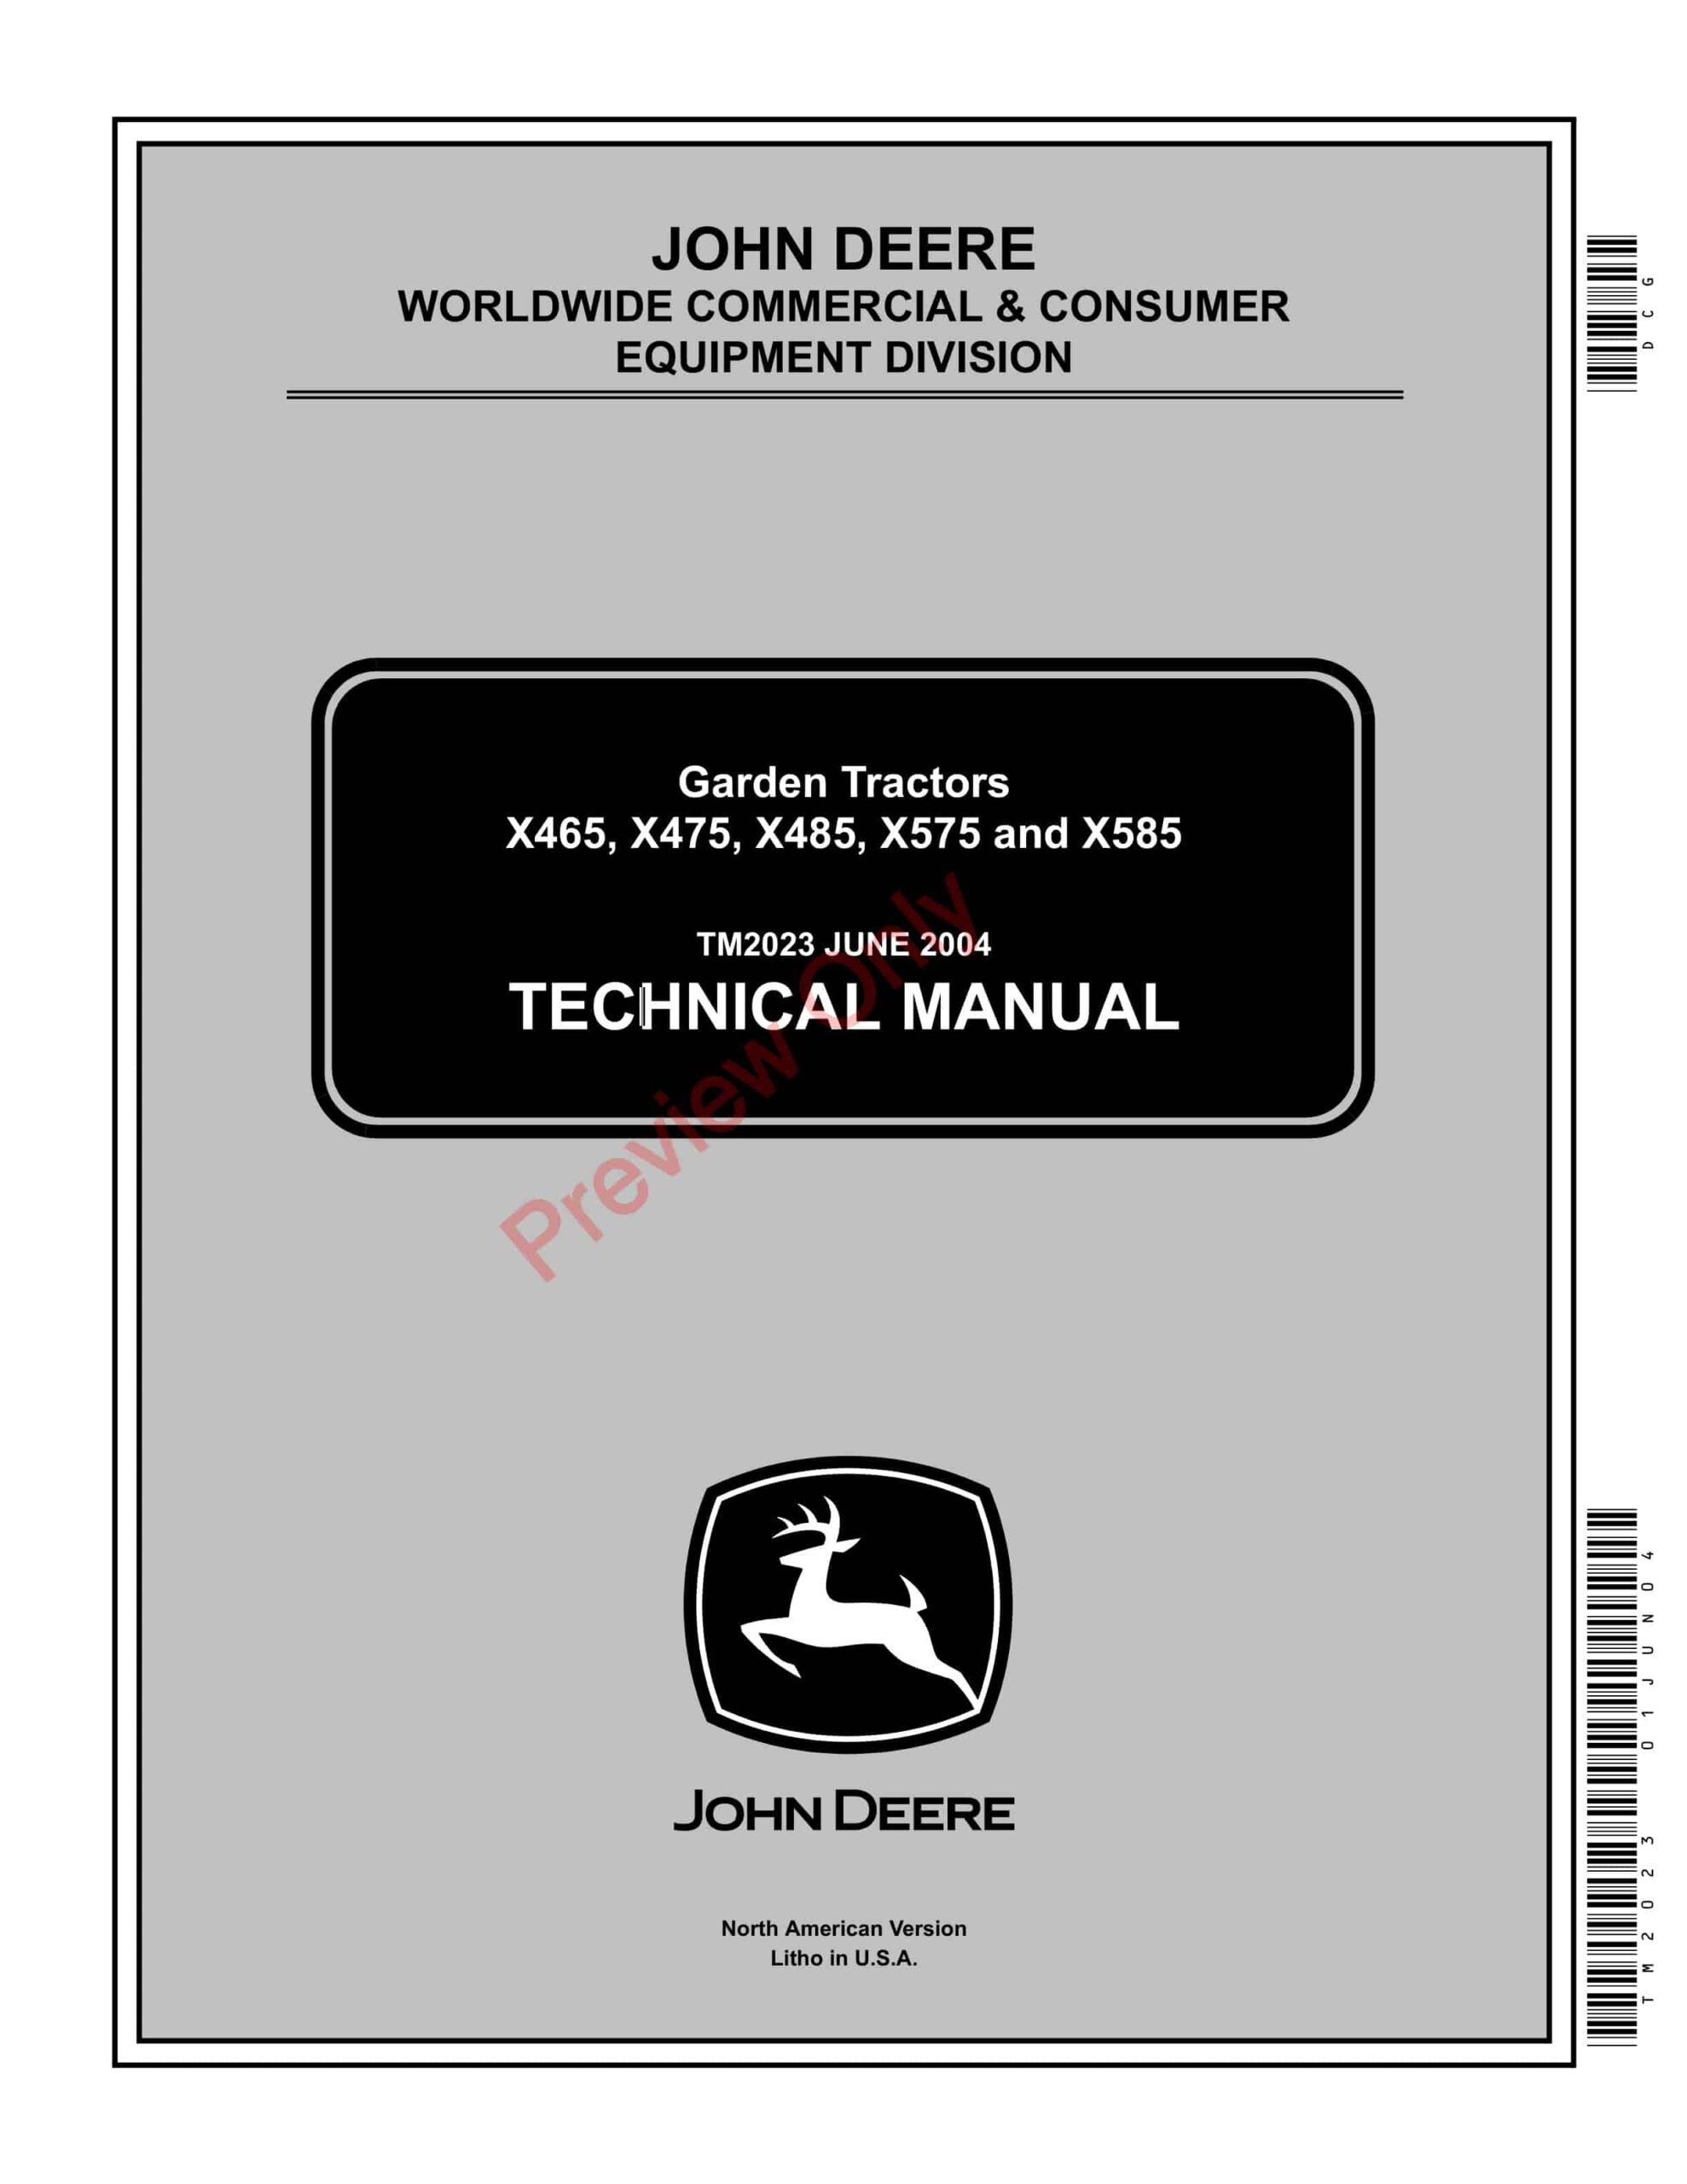 John Deere X465, X475, X485, X575, X585 Lawn and Garden Tractors Technical Manual TM2023 01JUN04-1